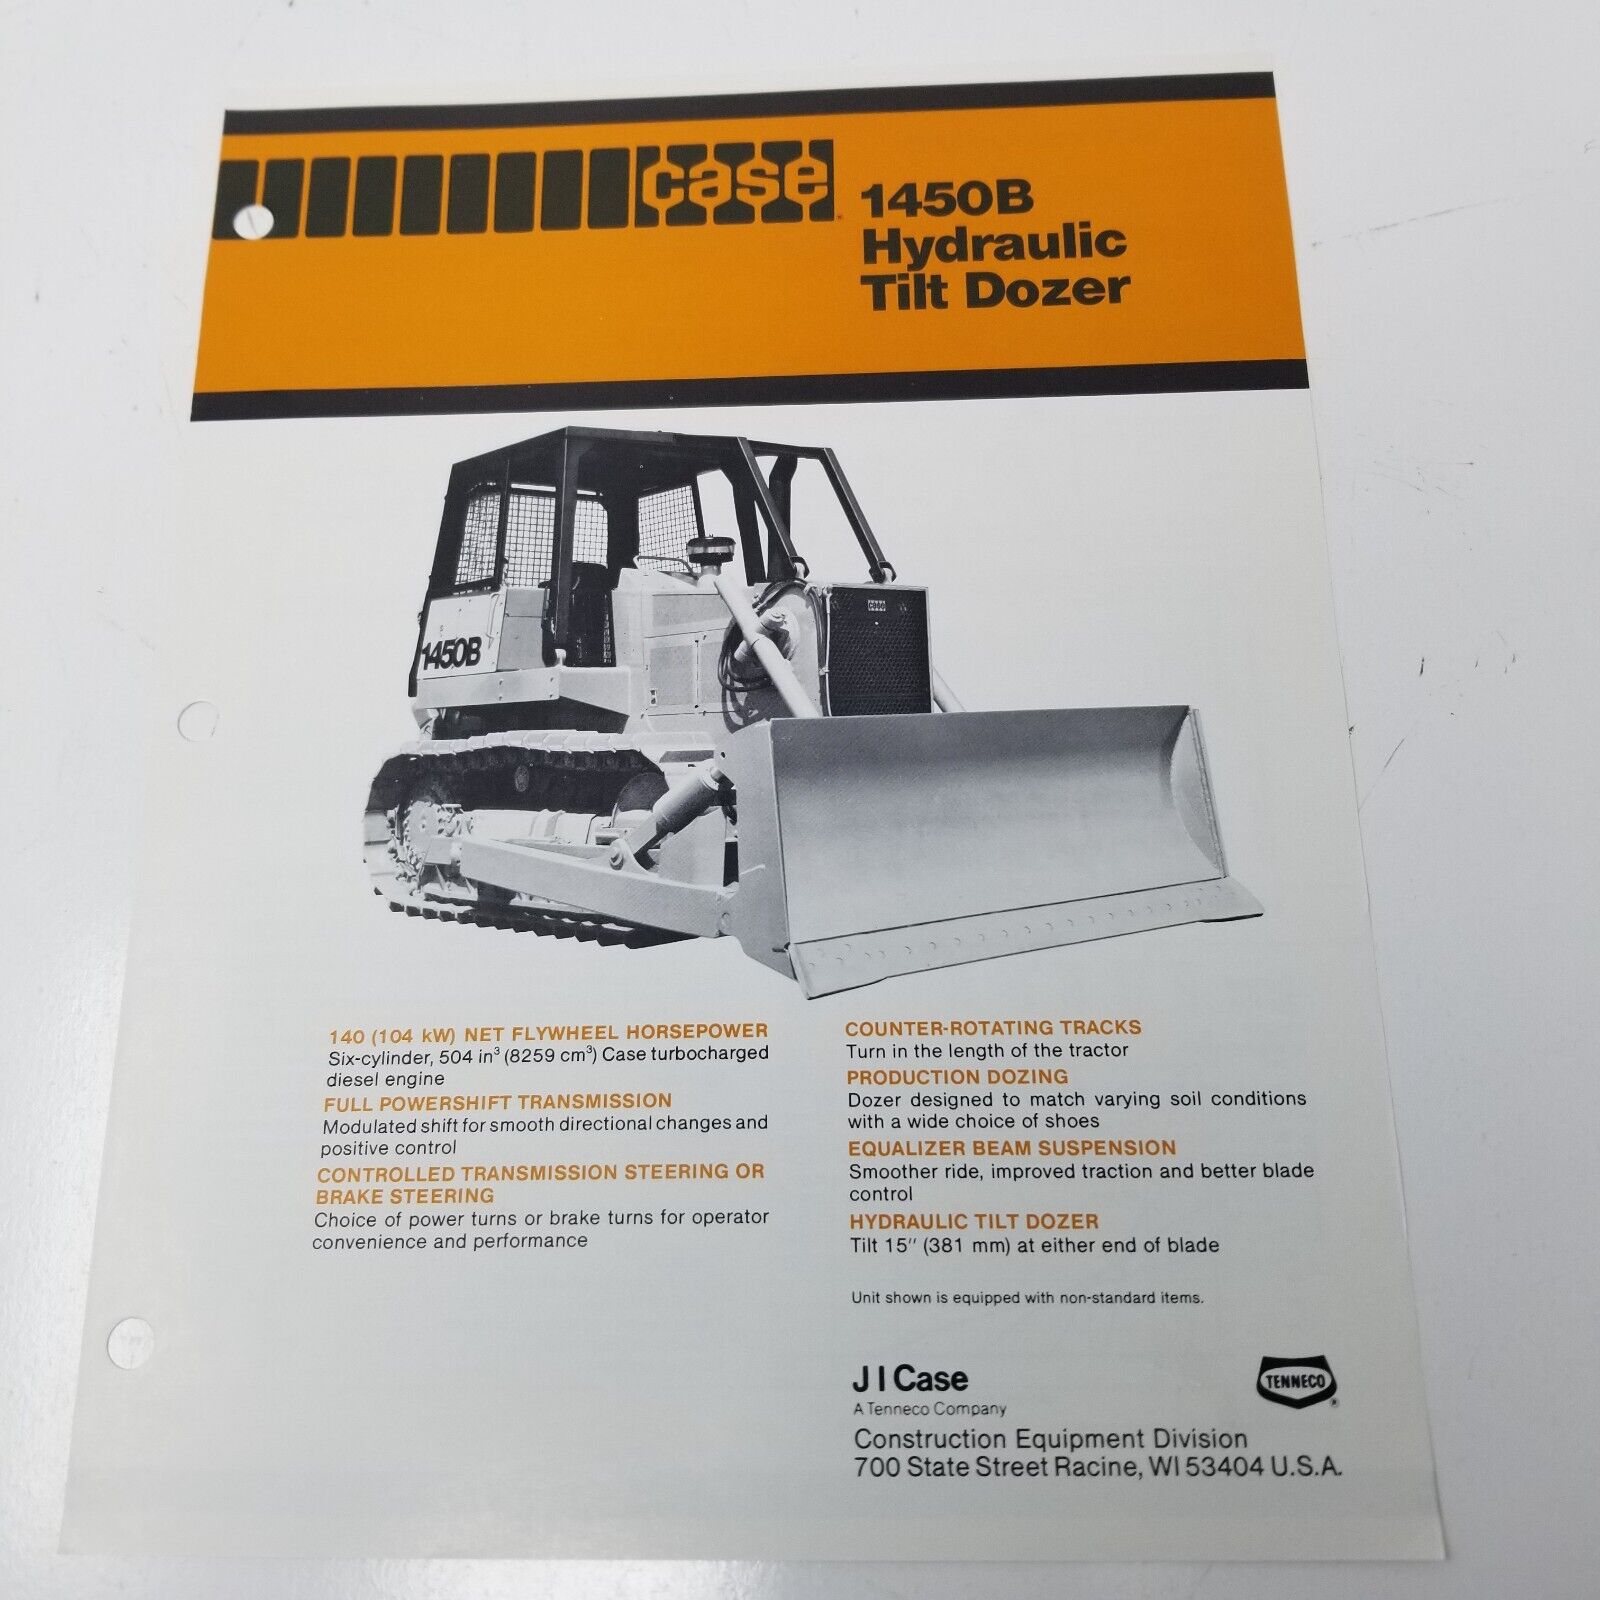 Case 1450B Hydraulic Tilt Dozer Sales Brochure 1980 Specifications Photos